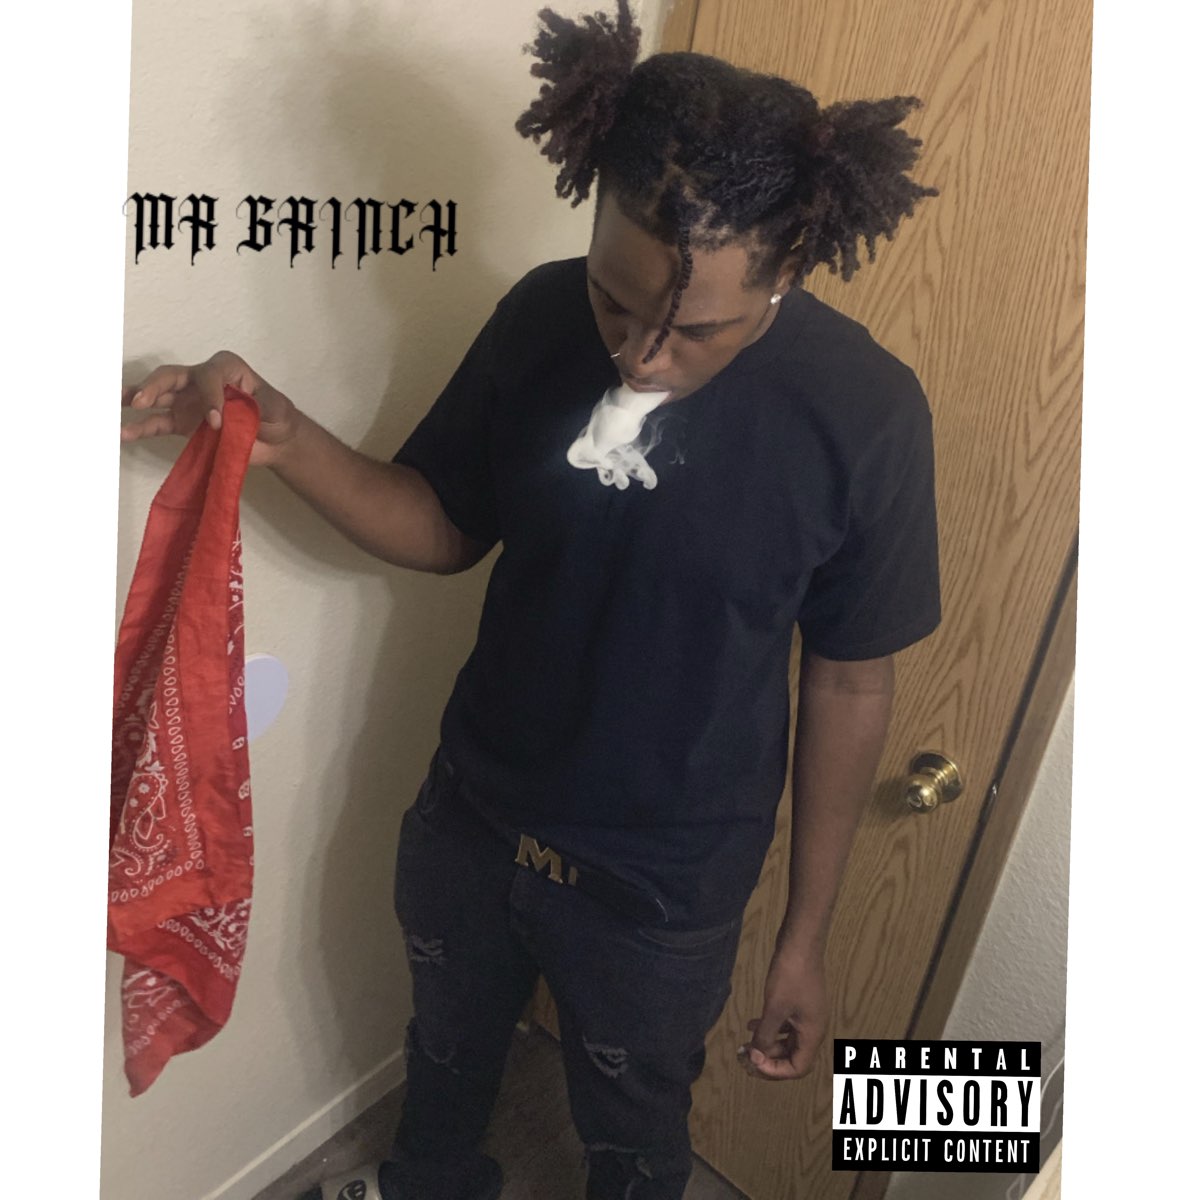 ‎Mr Grinch - Single - Album by Bj bris - Apple Music